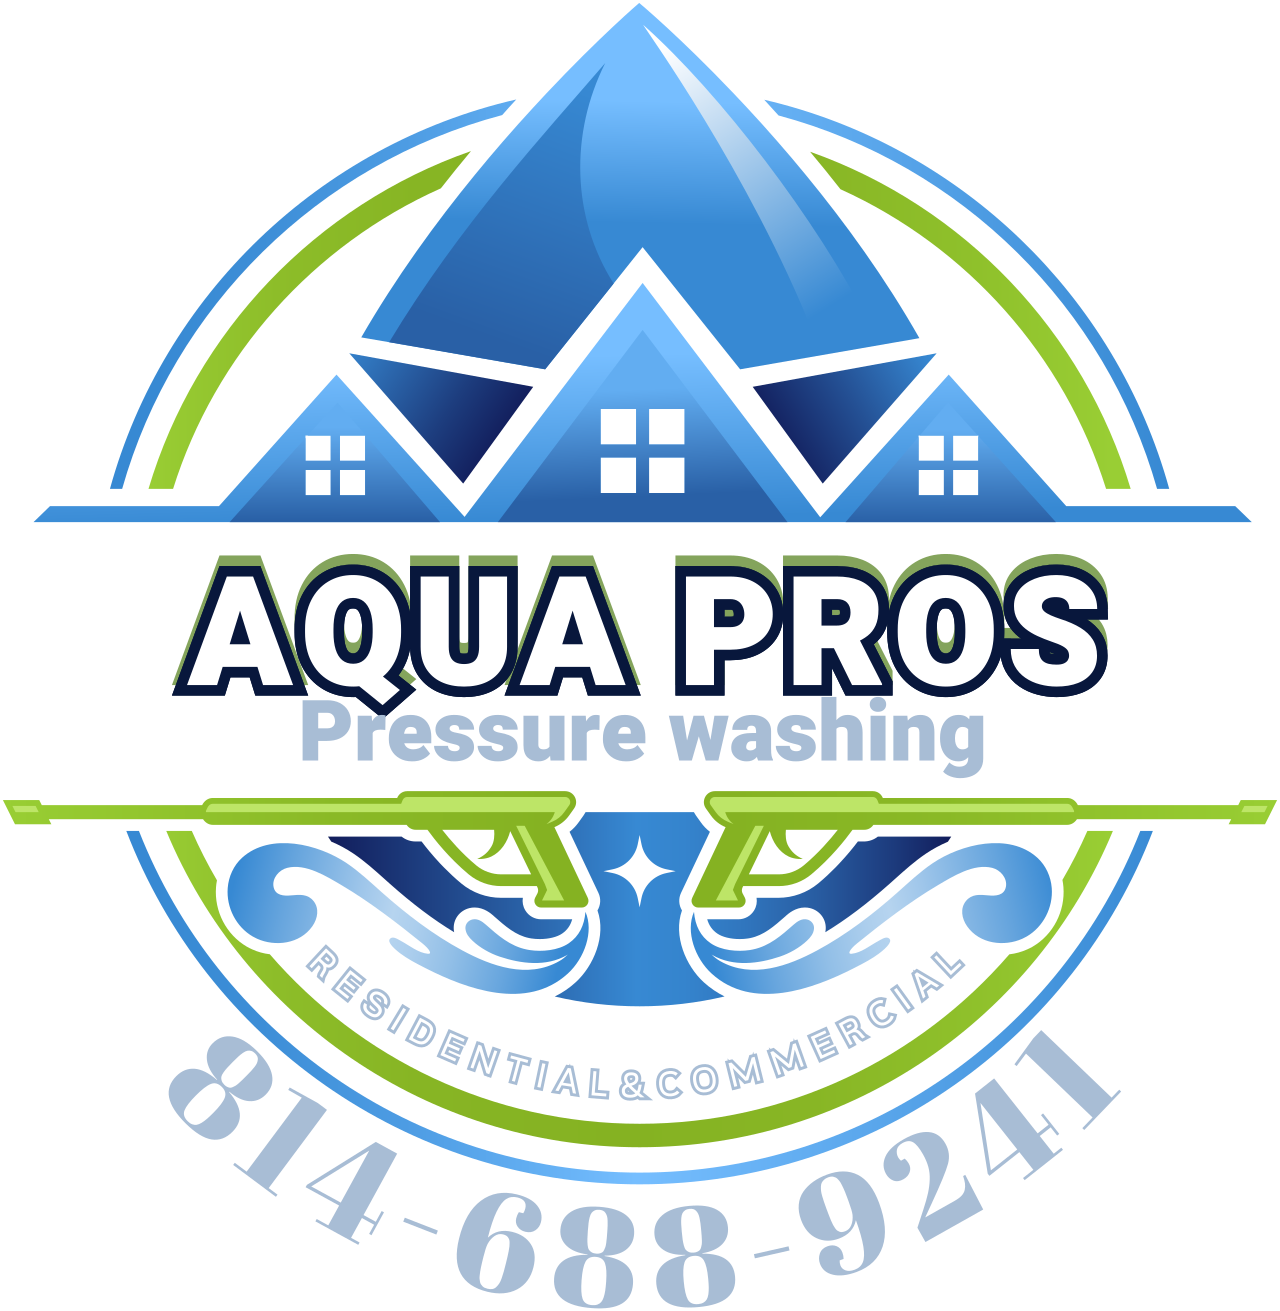 Aqua pros 's logo